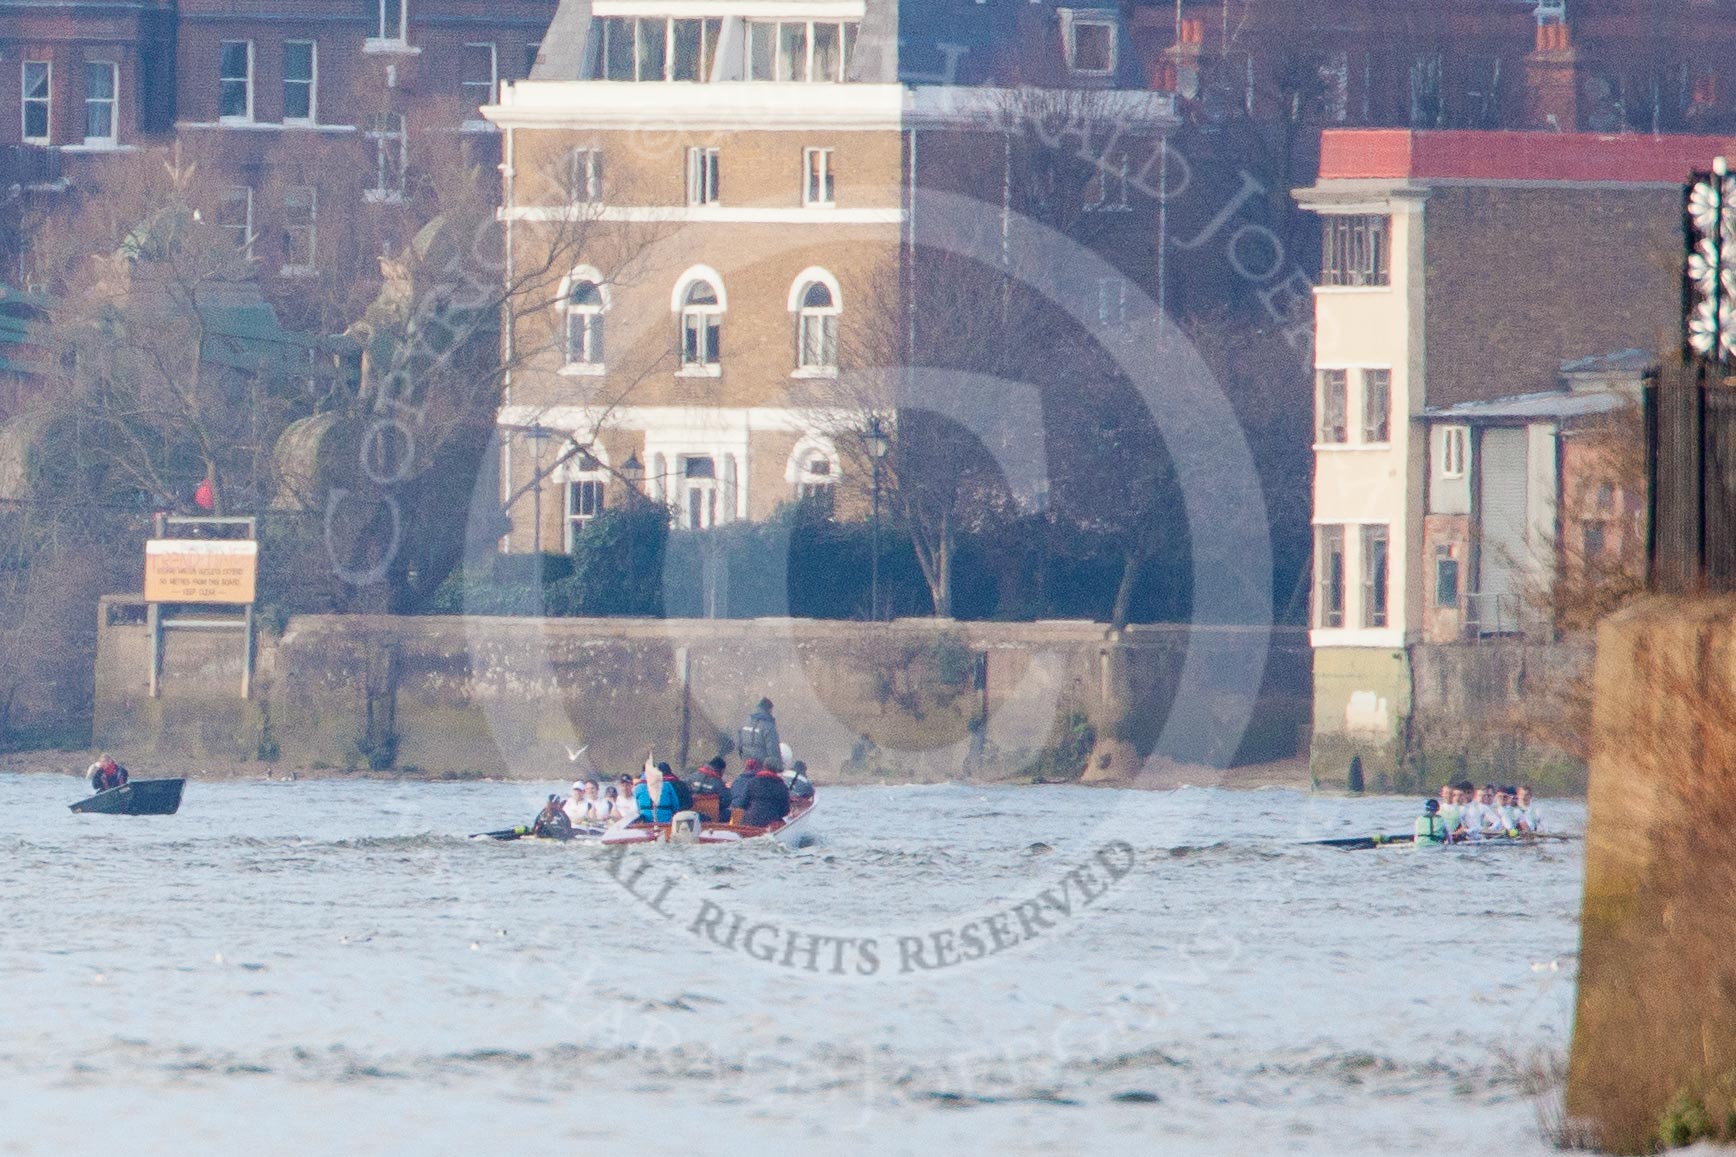 The Boat Race season 2013 - fixture CUBC vs Leander.
River Thames Tideway between Putney Bridge and Mortlake,
London SW15,

United Kingdom,
on 02 March 2013 at 16:02, image #183